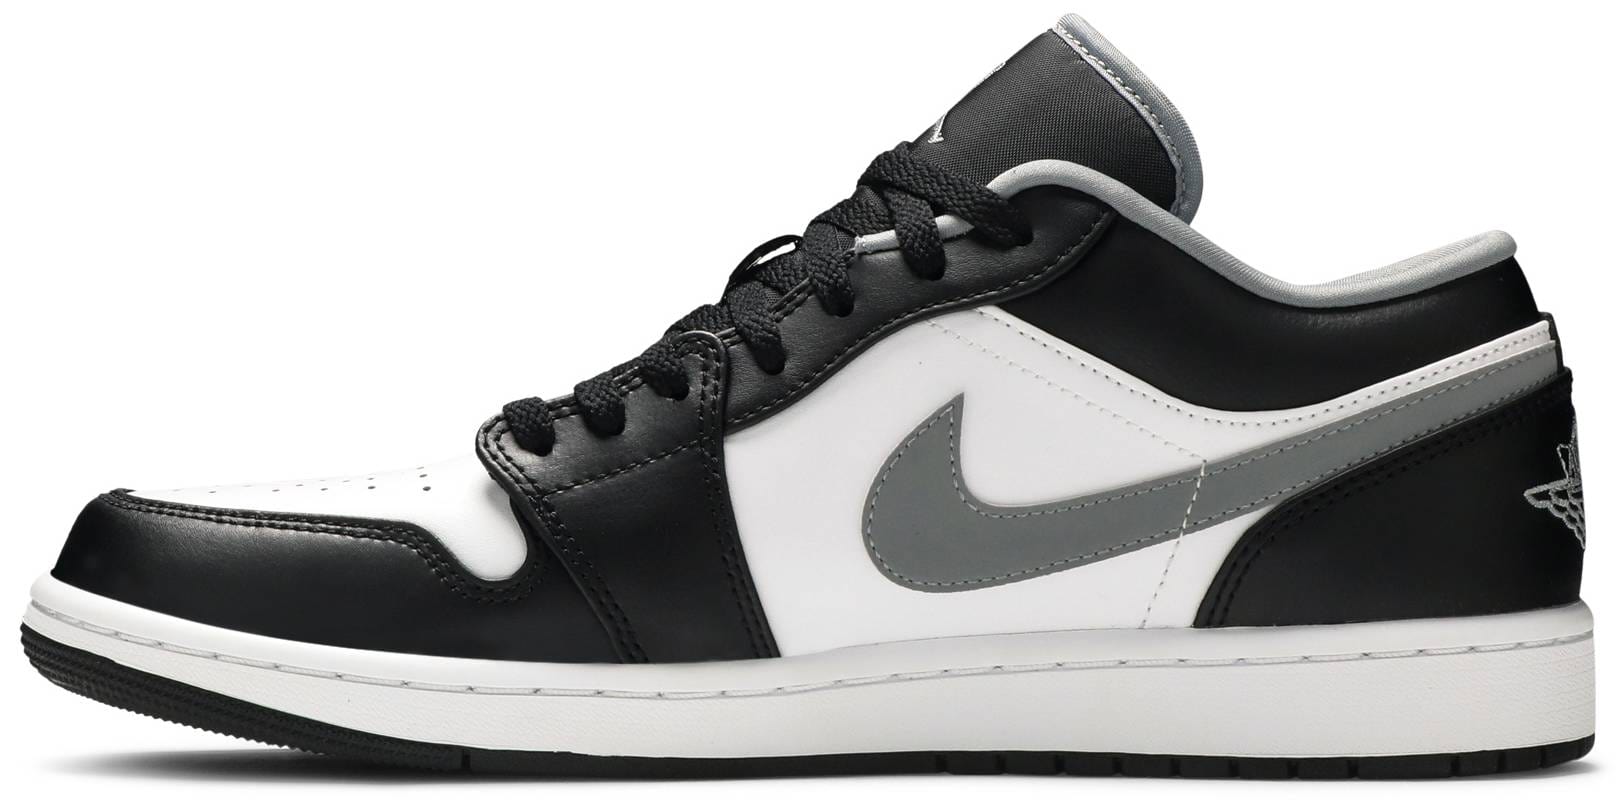 Nike Air Jordan 1 Low Black White Grey Men's